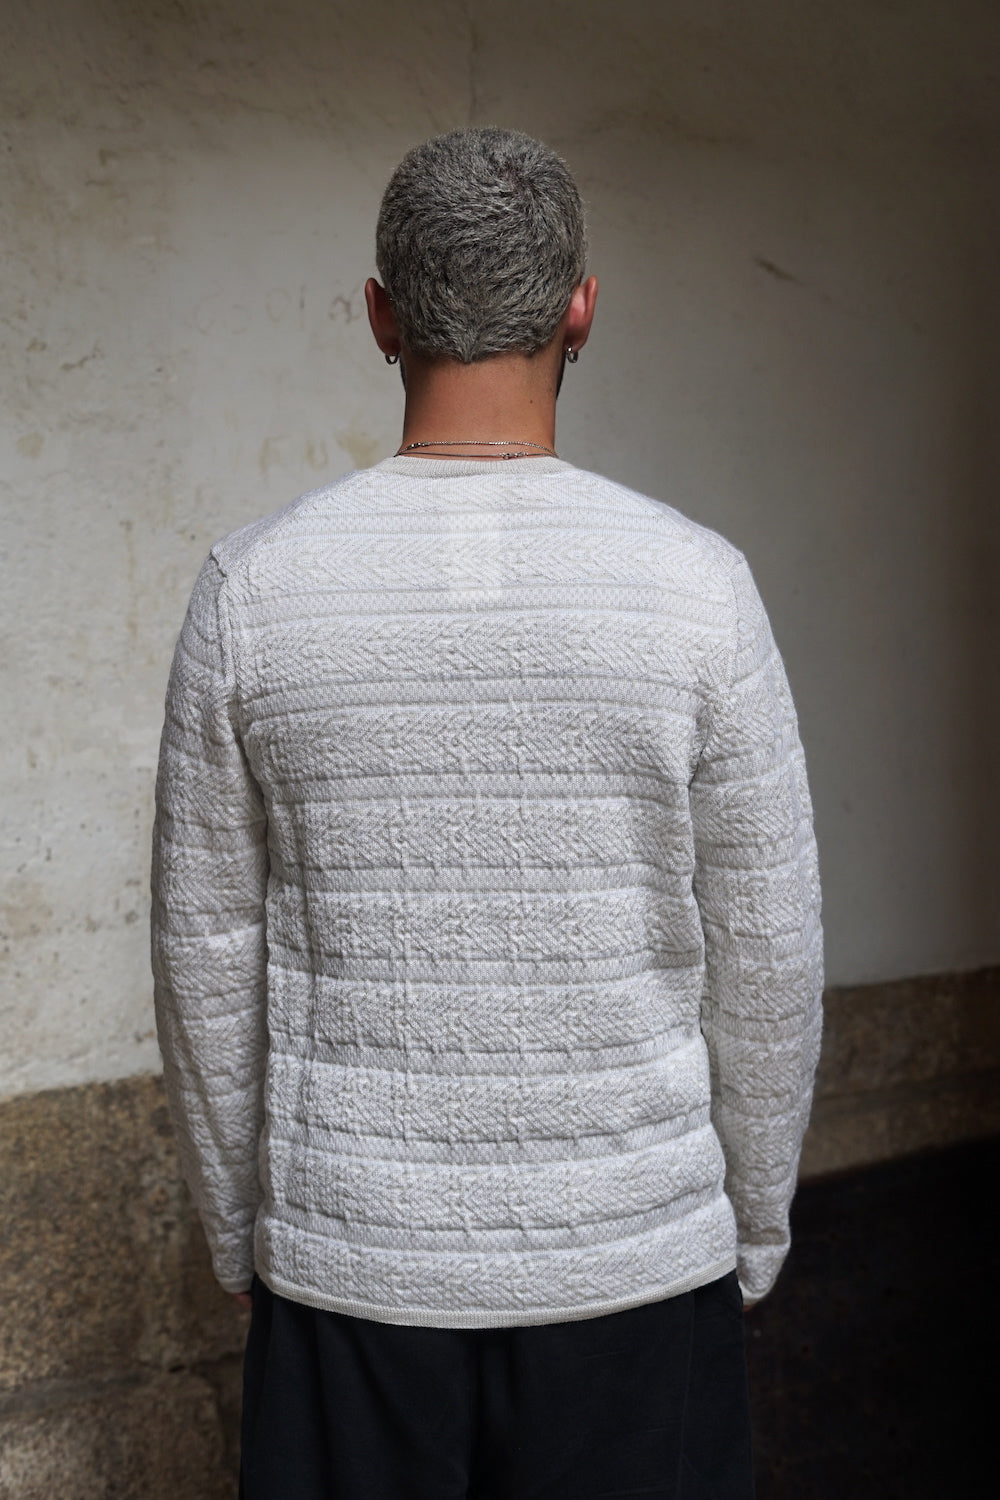 White Textured Sweater